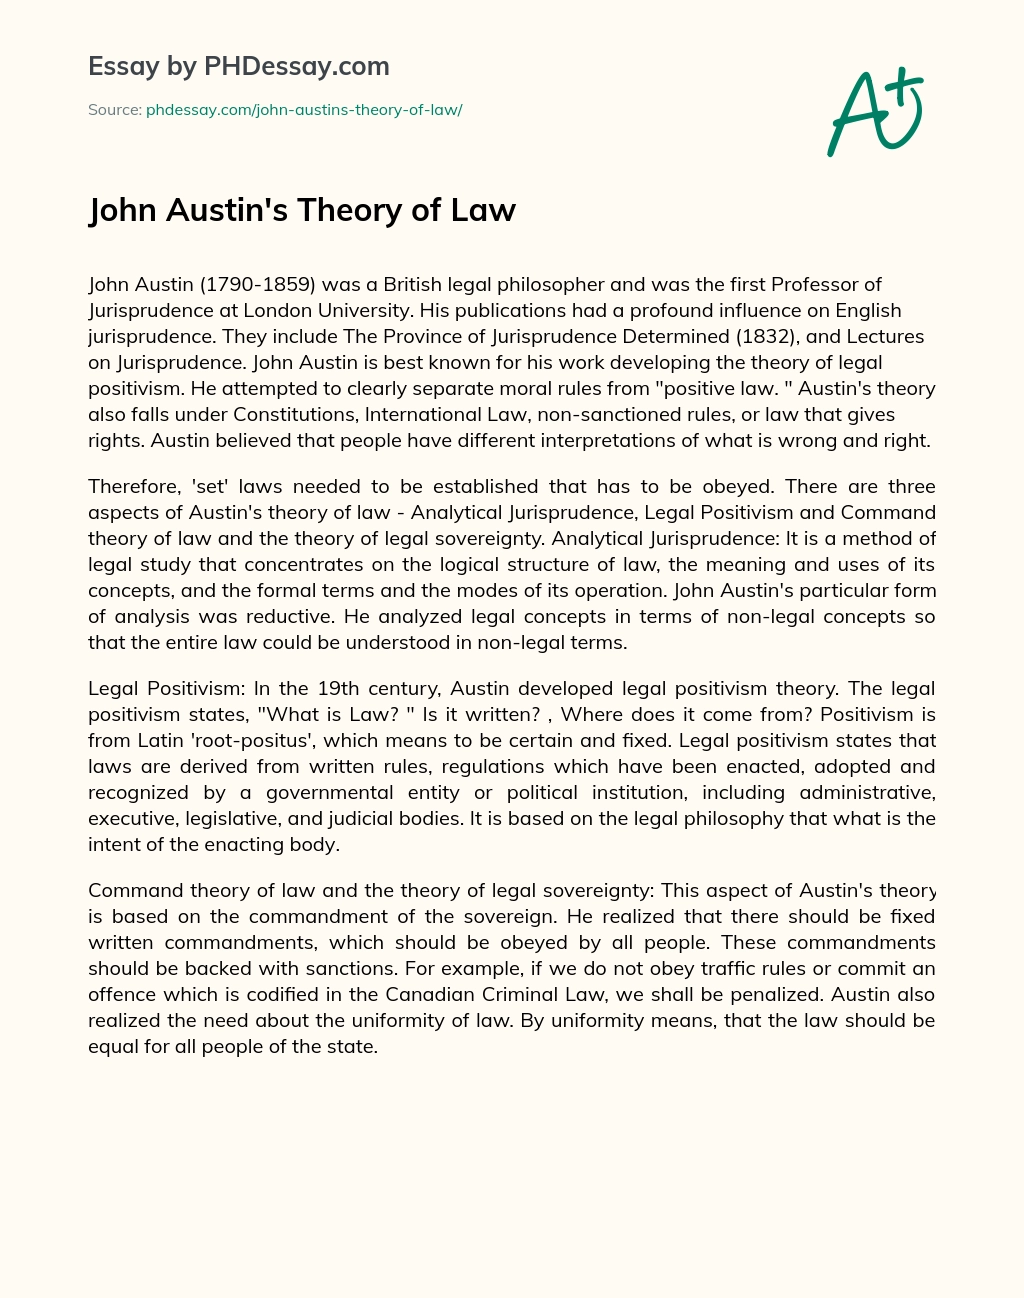 John Austin’s Theory of Law essay